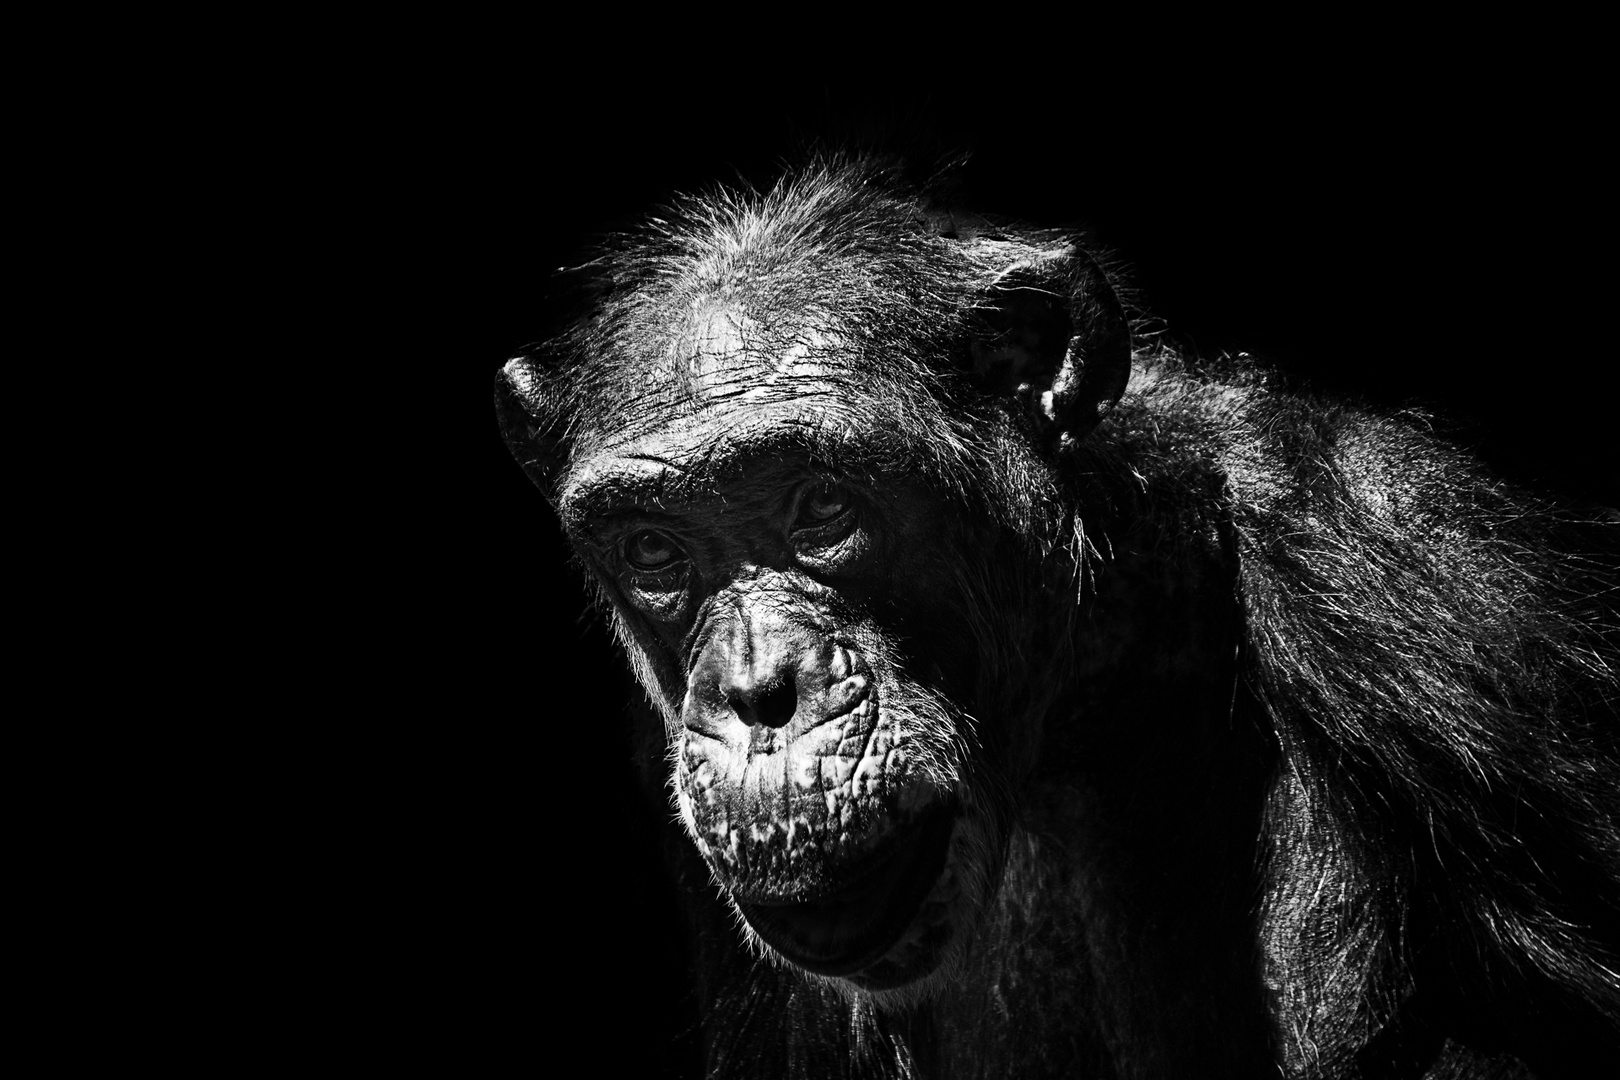 Ape mother